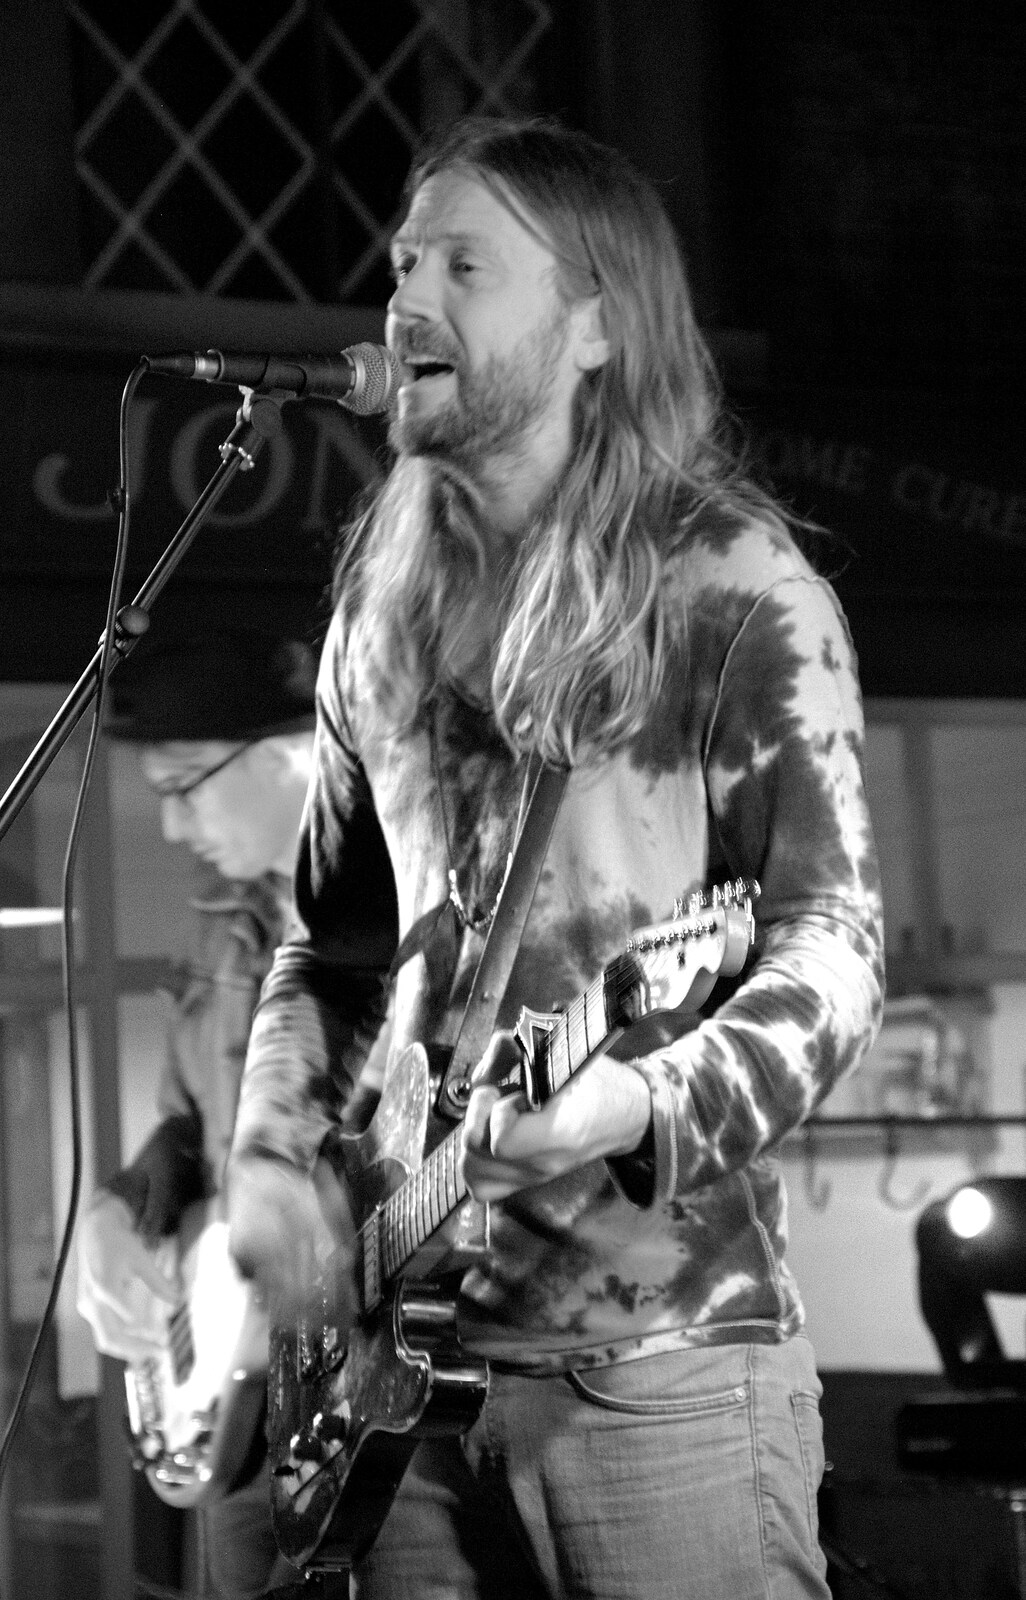 Jason on guitar from The Bressingham Band Night, Bressingham Steam Museum, Norfolk - 5th October 2019